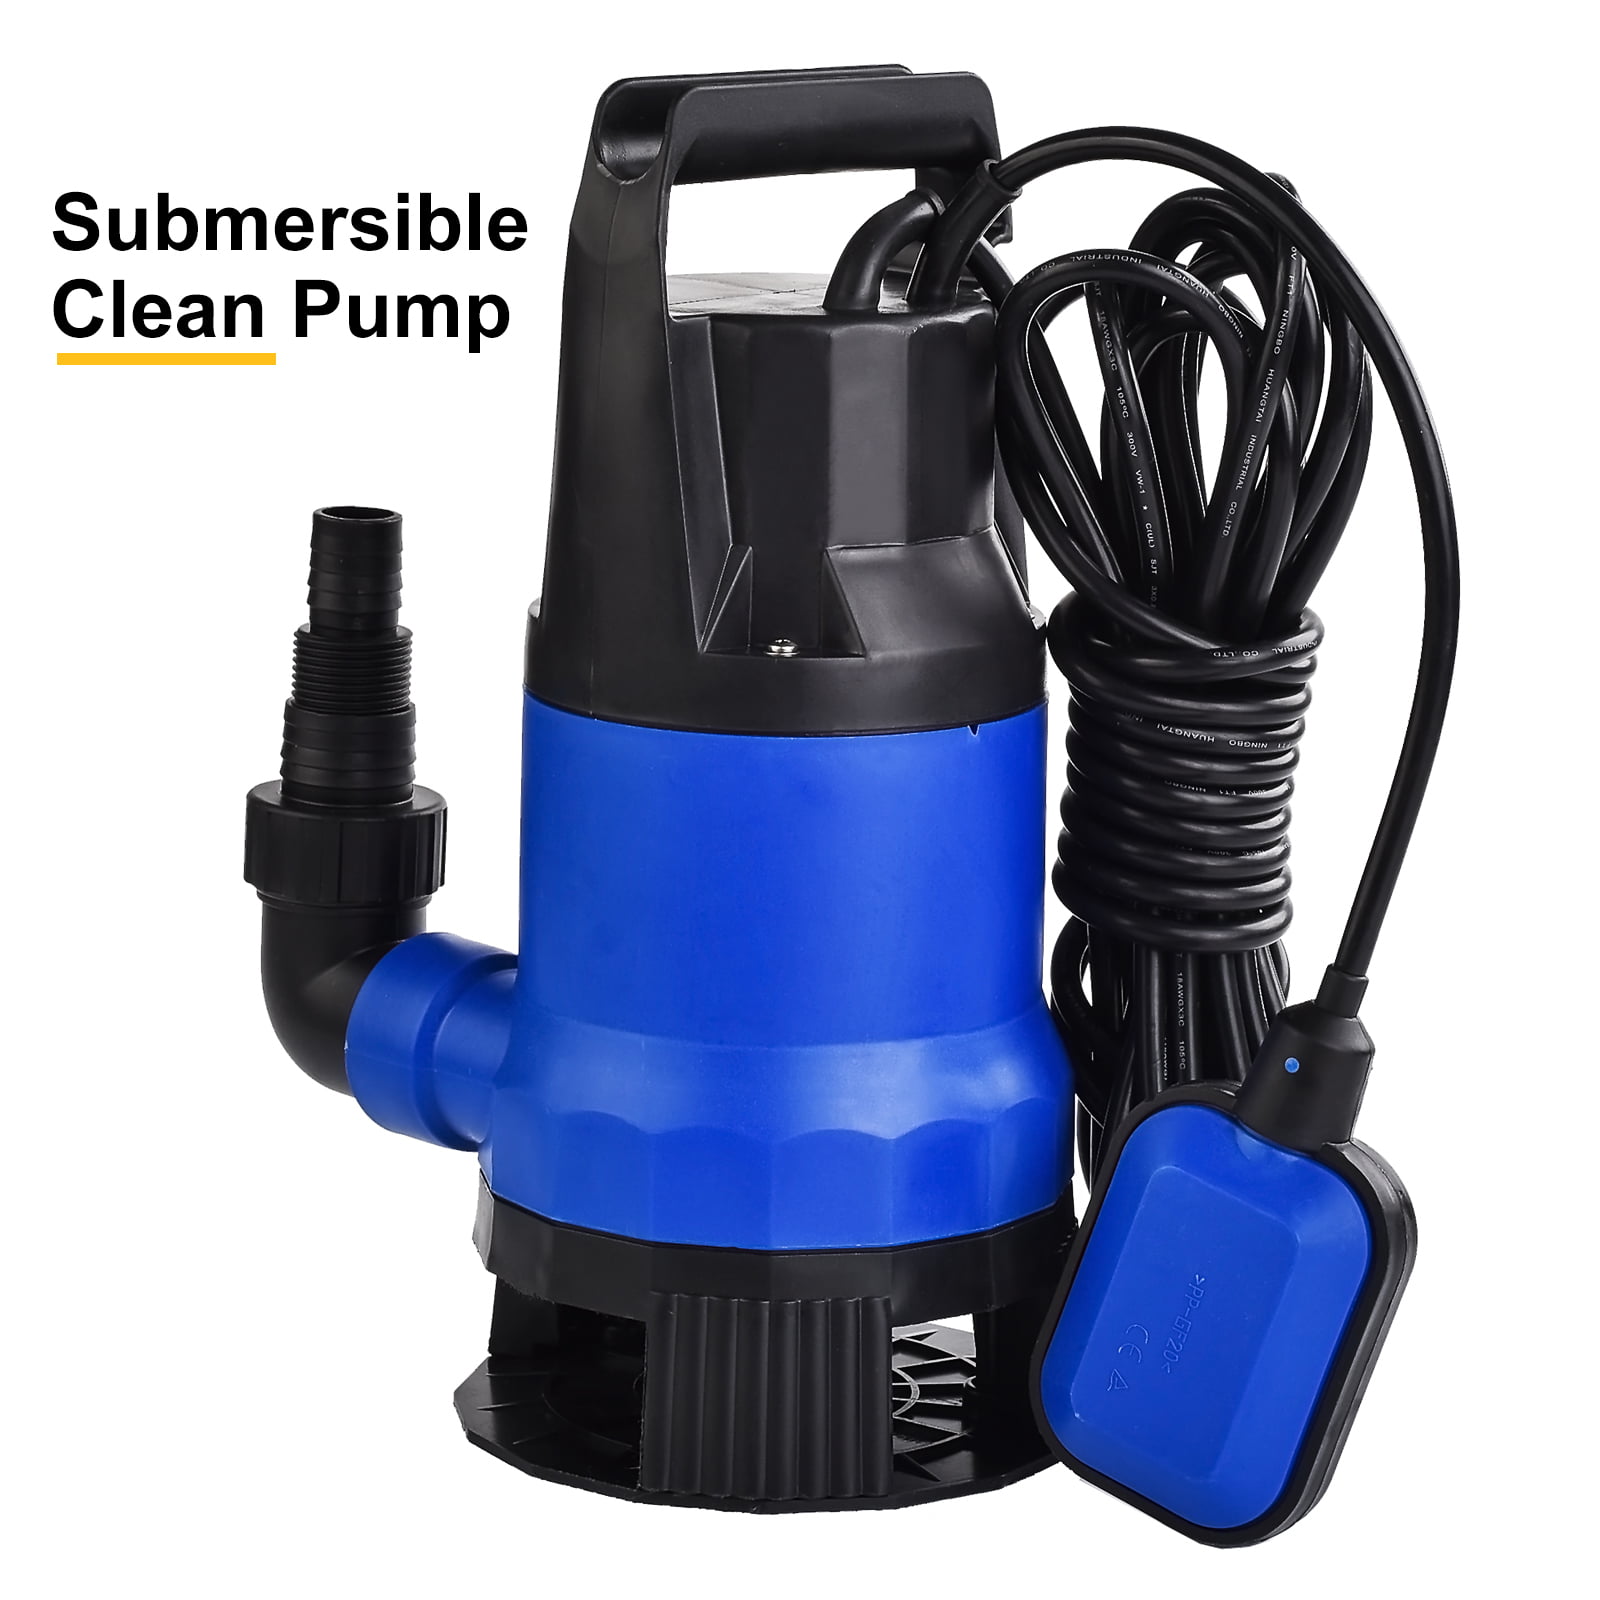 SUNCOO 1/2HP Submersible Sump Pump Clean/Dirty Water Pumping Sump Pumps 2100GPH 400W for Swimming Pool Pond Garden Hot Tub Flood Drain Water Pump 